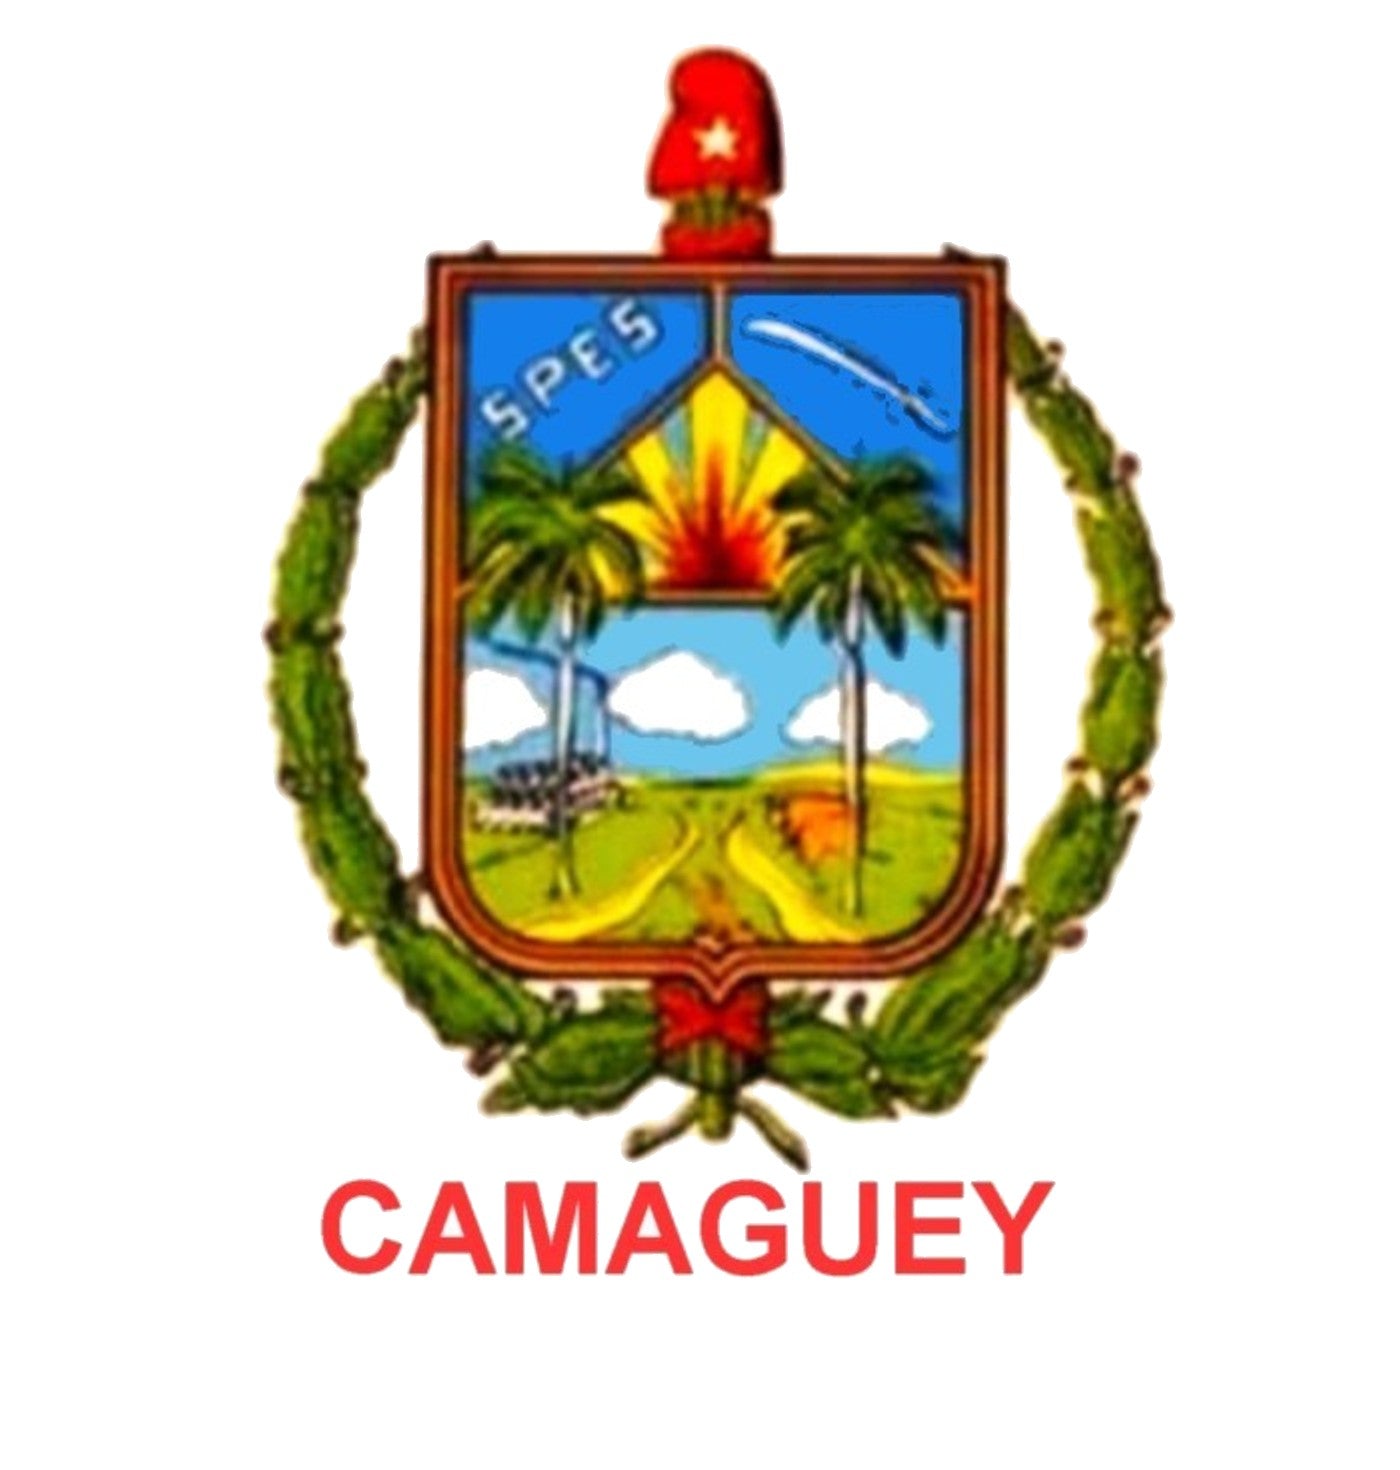 “Camagüey “ White T-Shirt